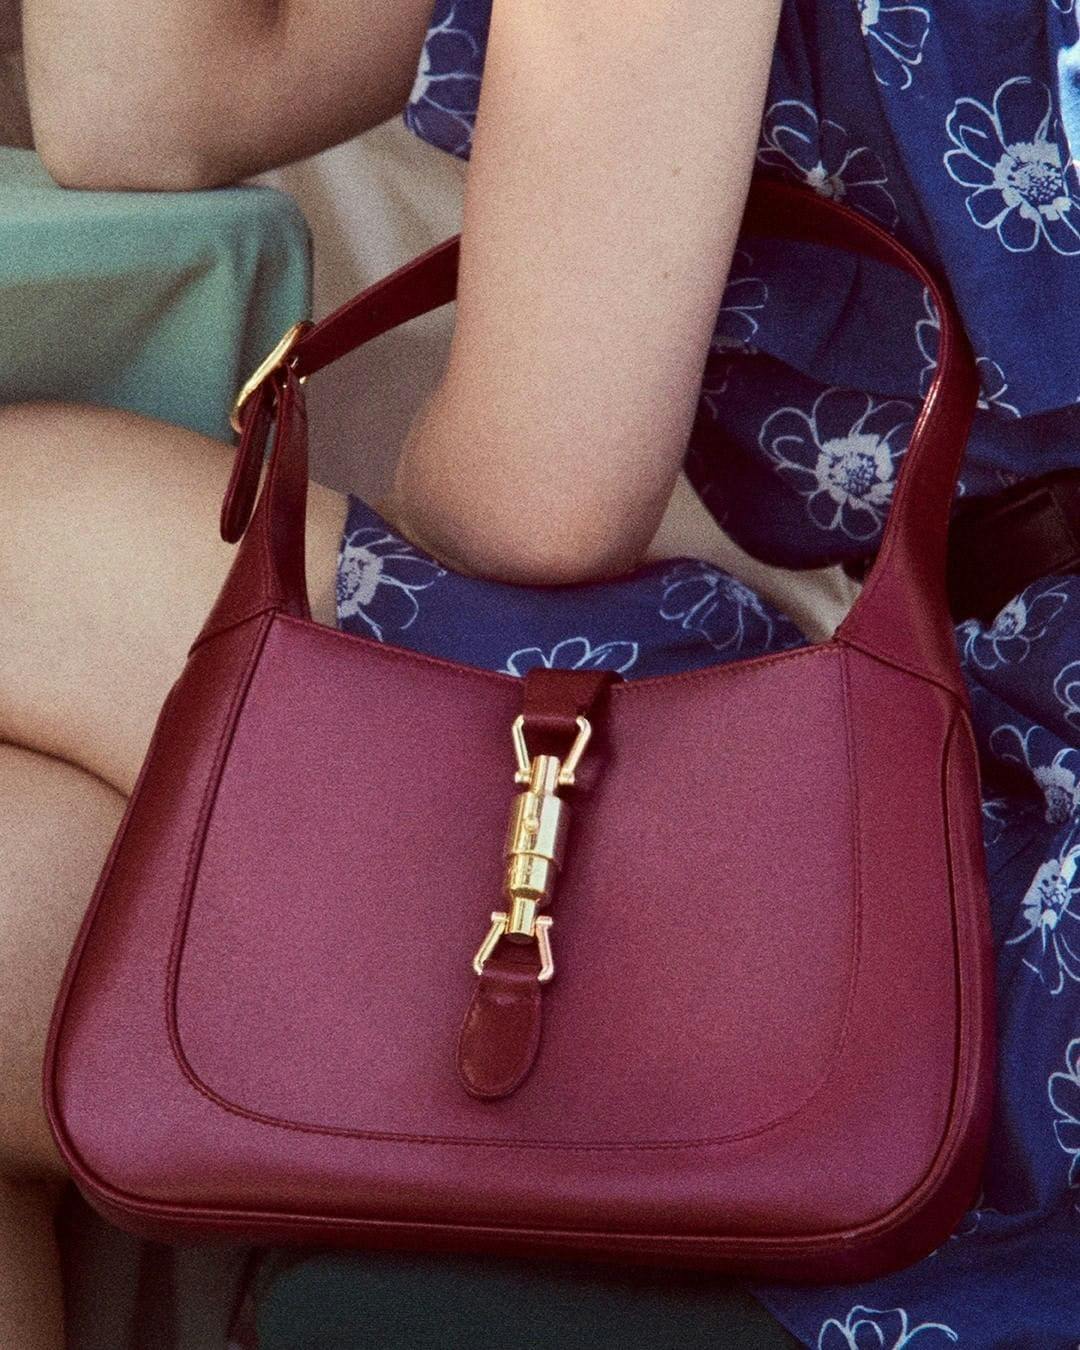 purse handbag bag accessories